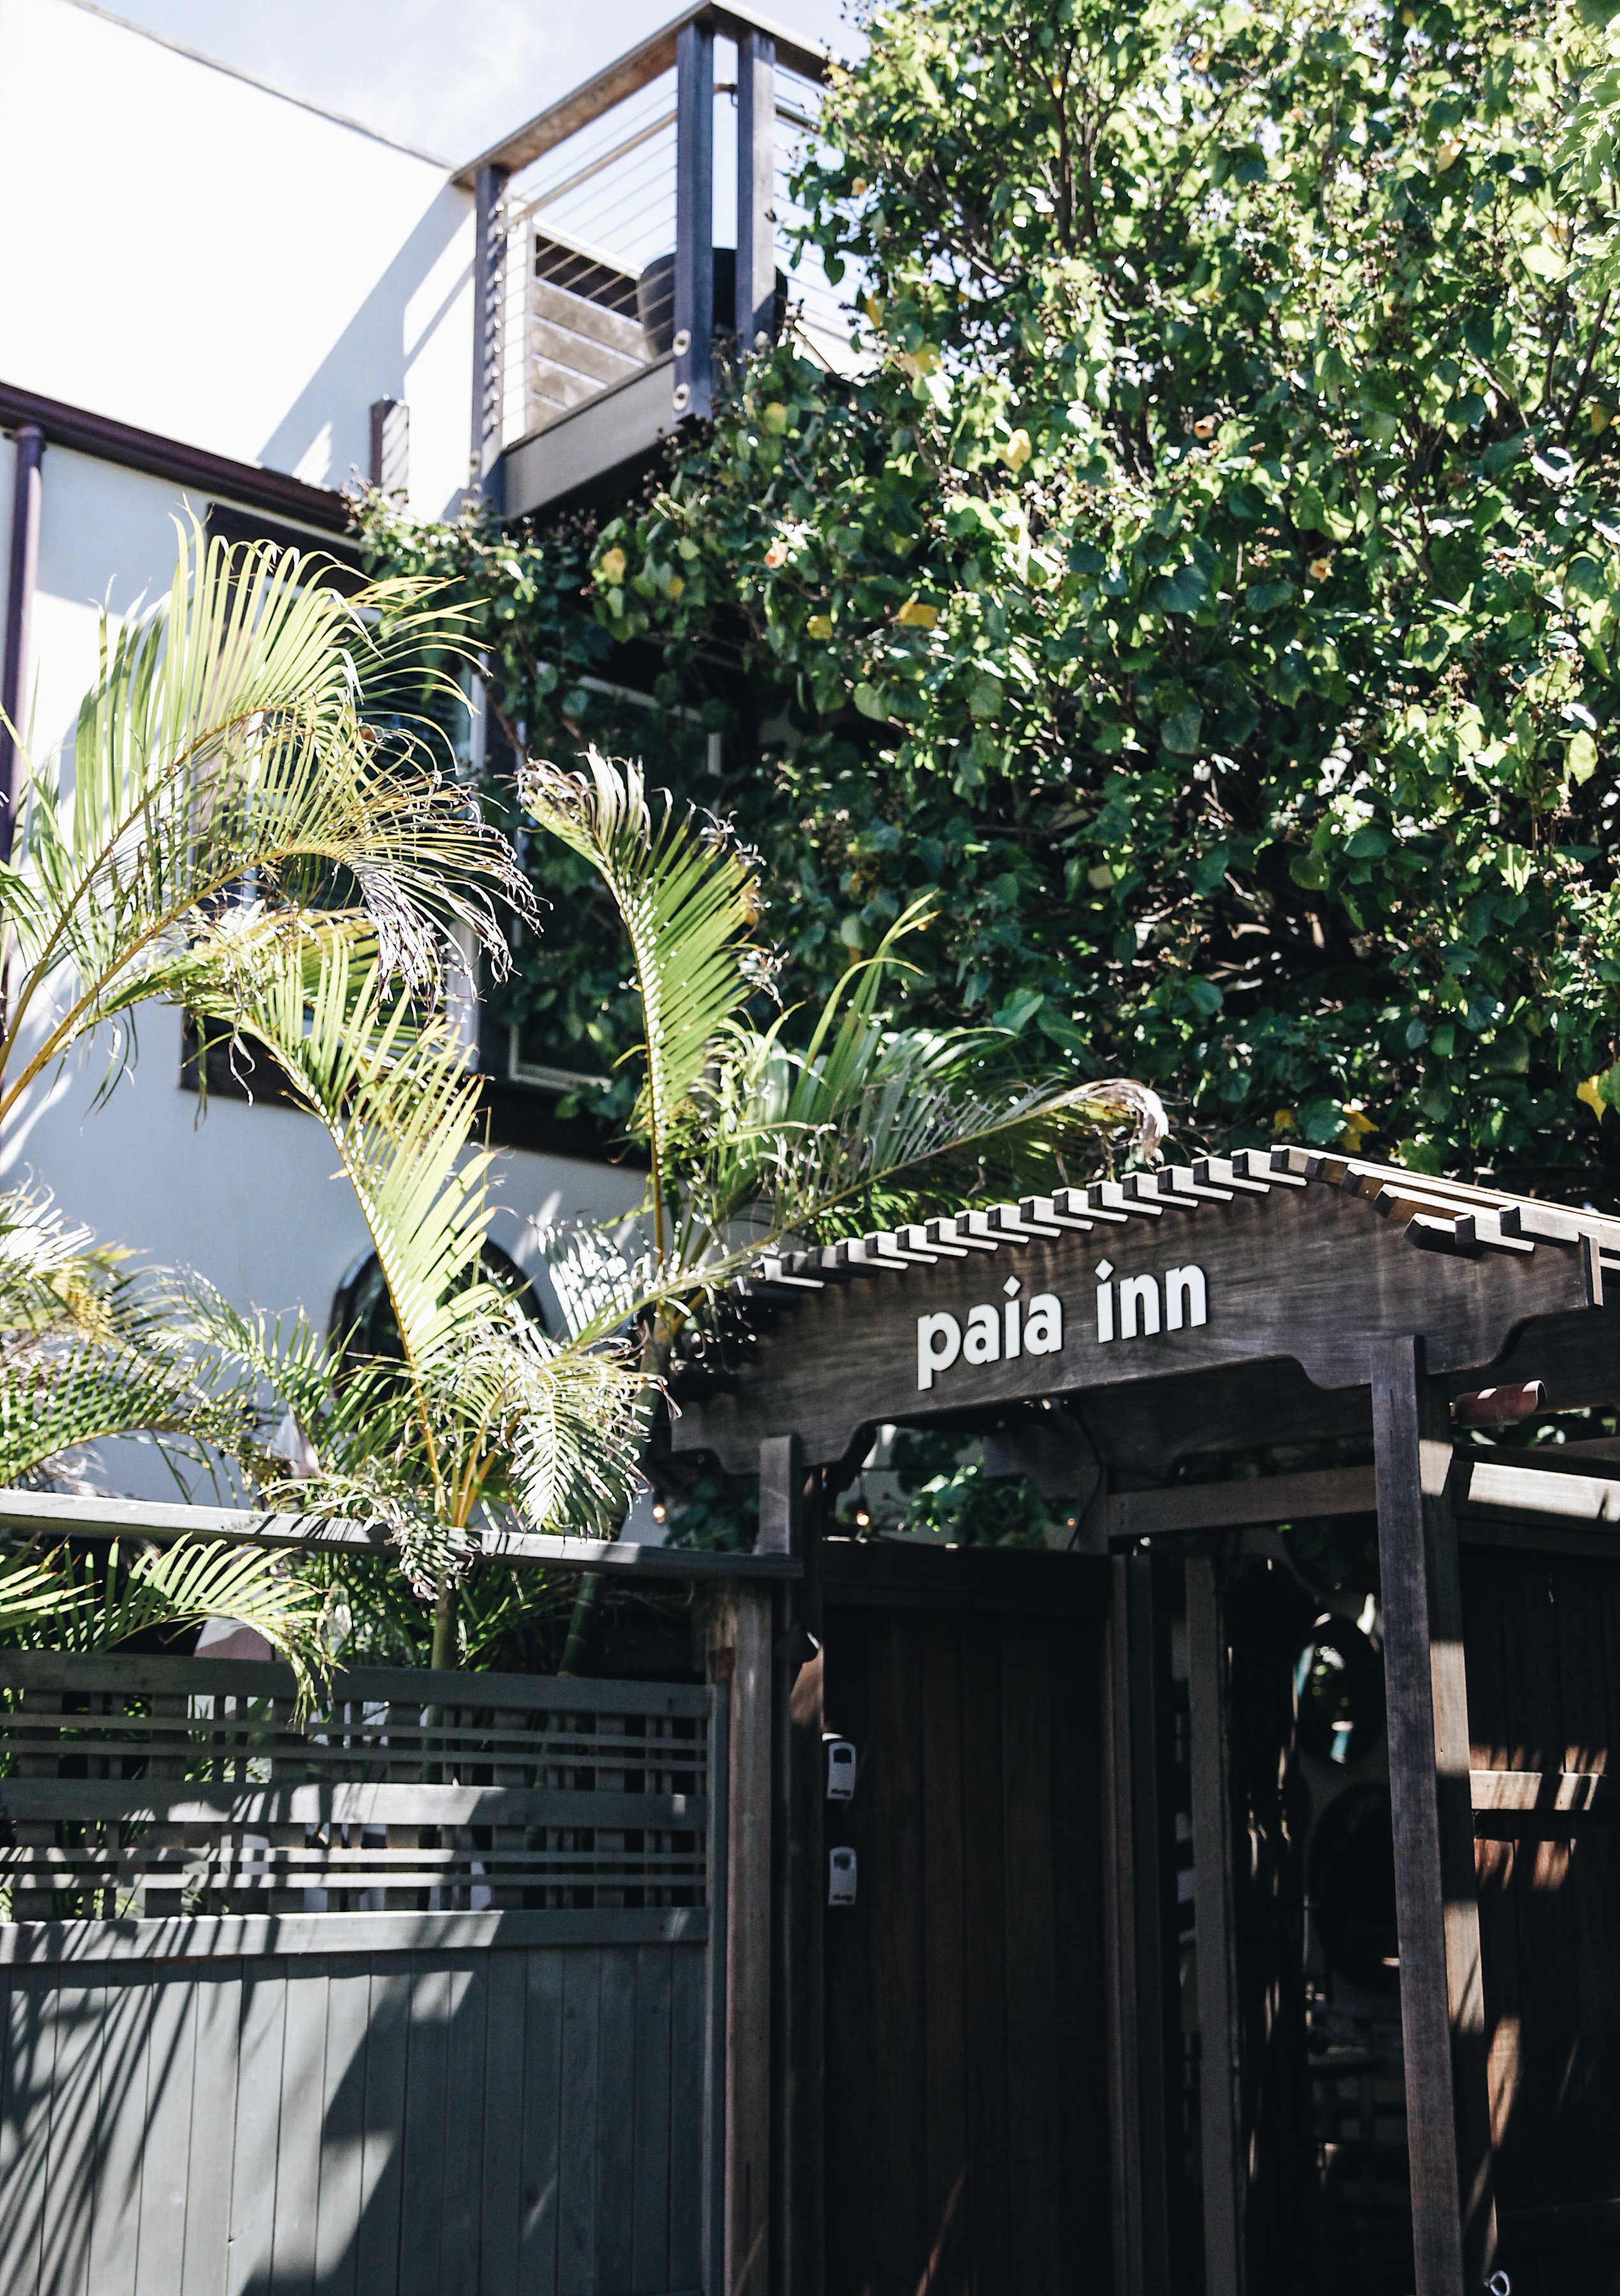 Paia Inn